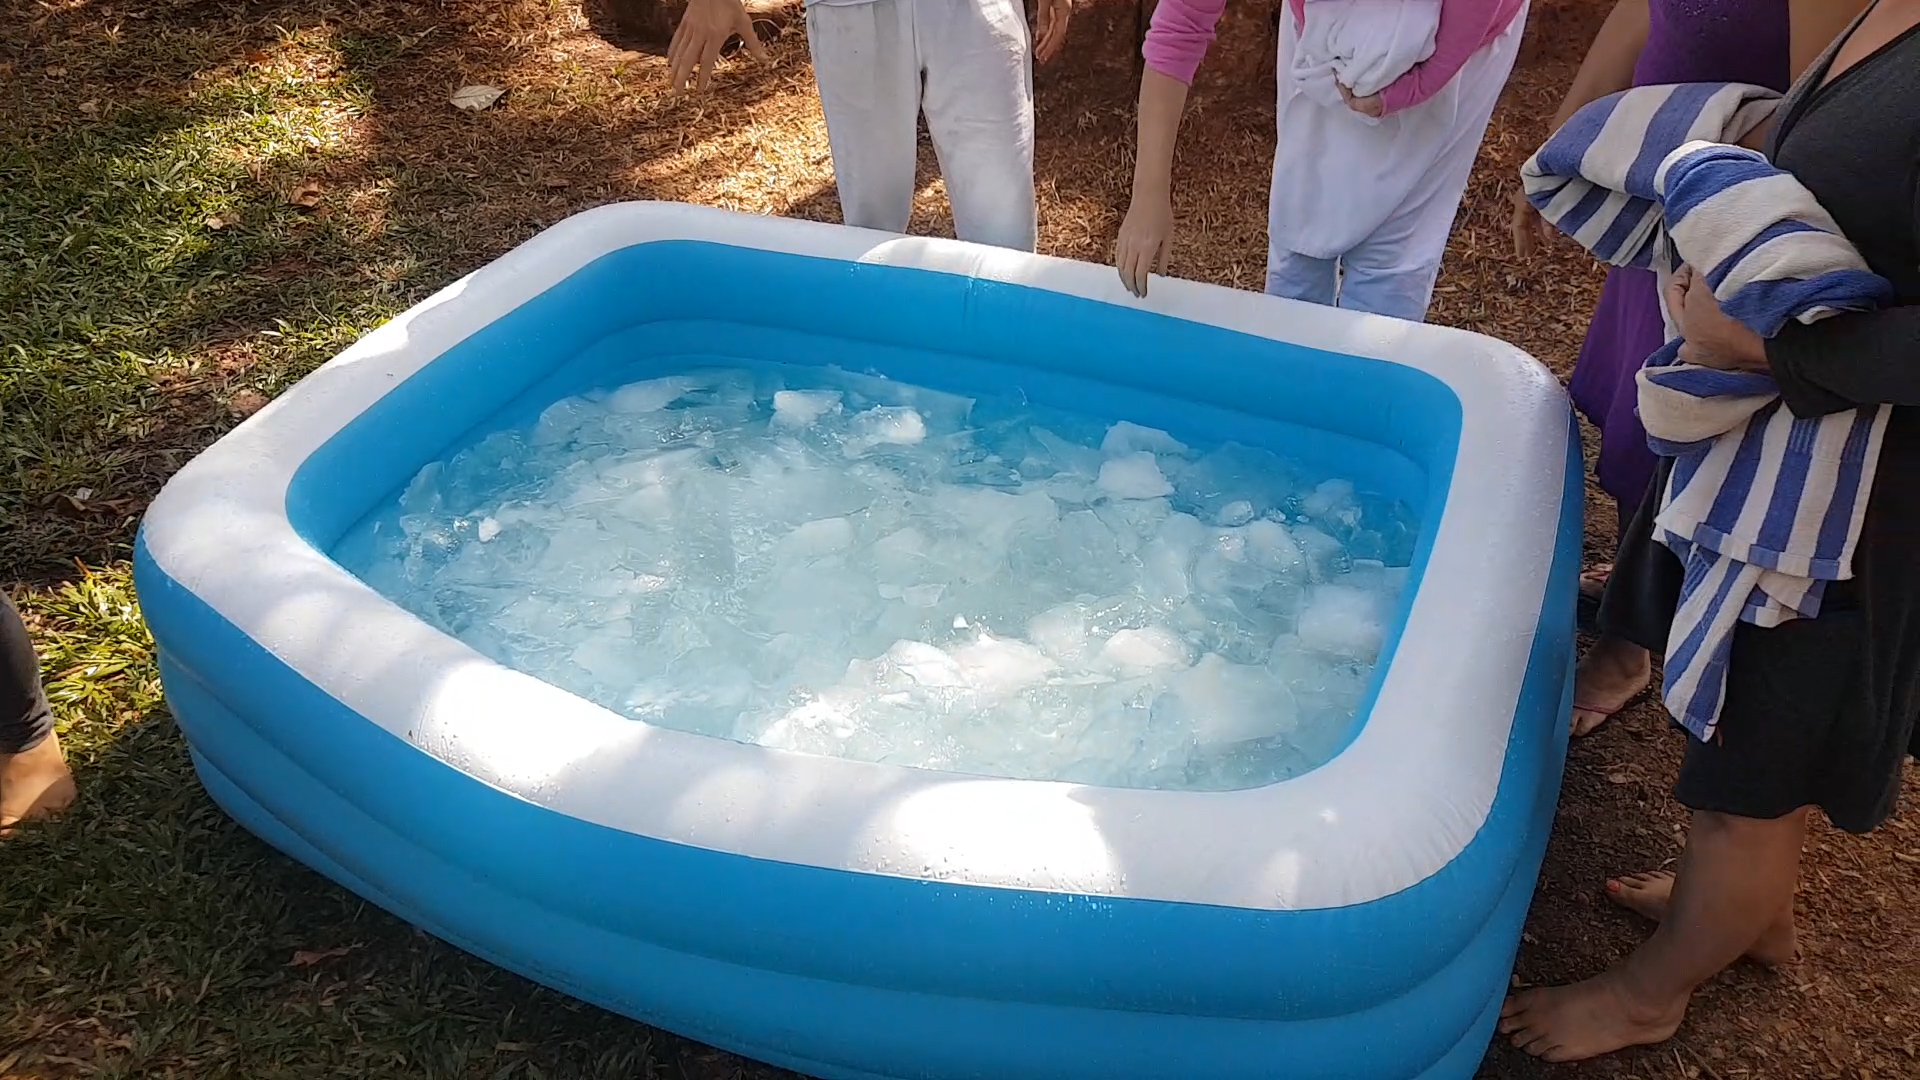 Wim Hof Ice Bath: Technique + Breathing Method in Cold Water